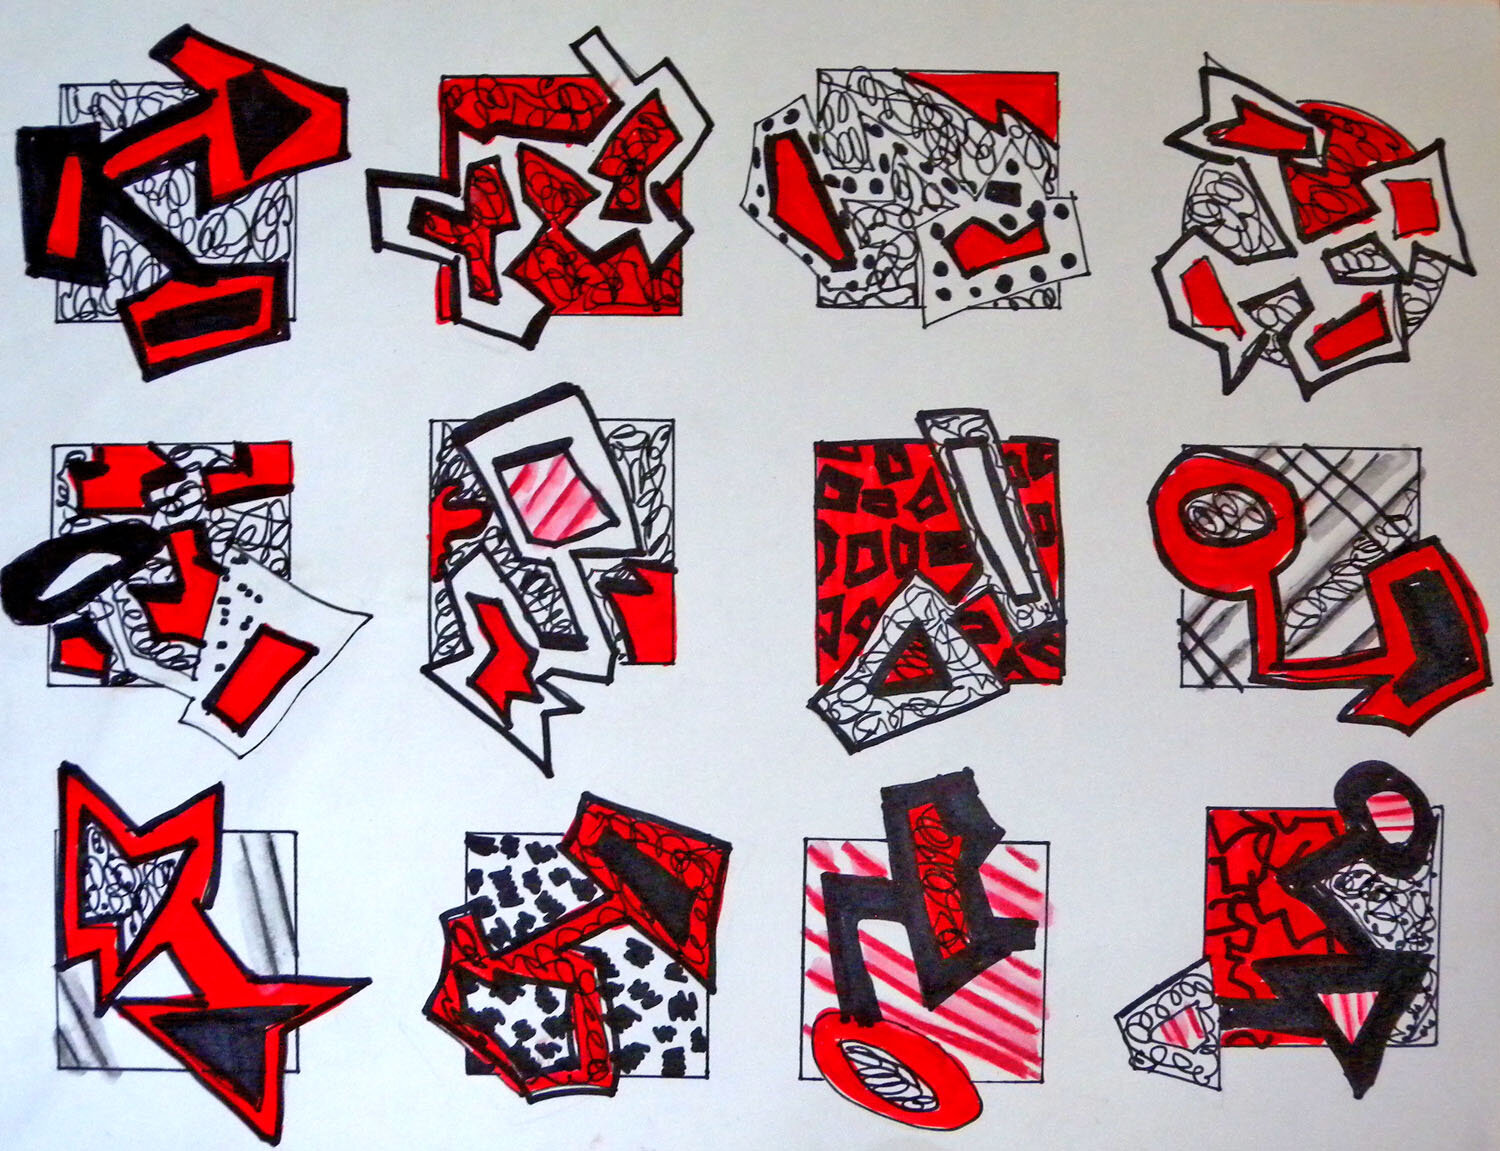 custom-circles-squares-illustration-blairwear-1980's-popart (8).jpg